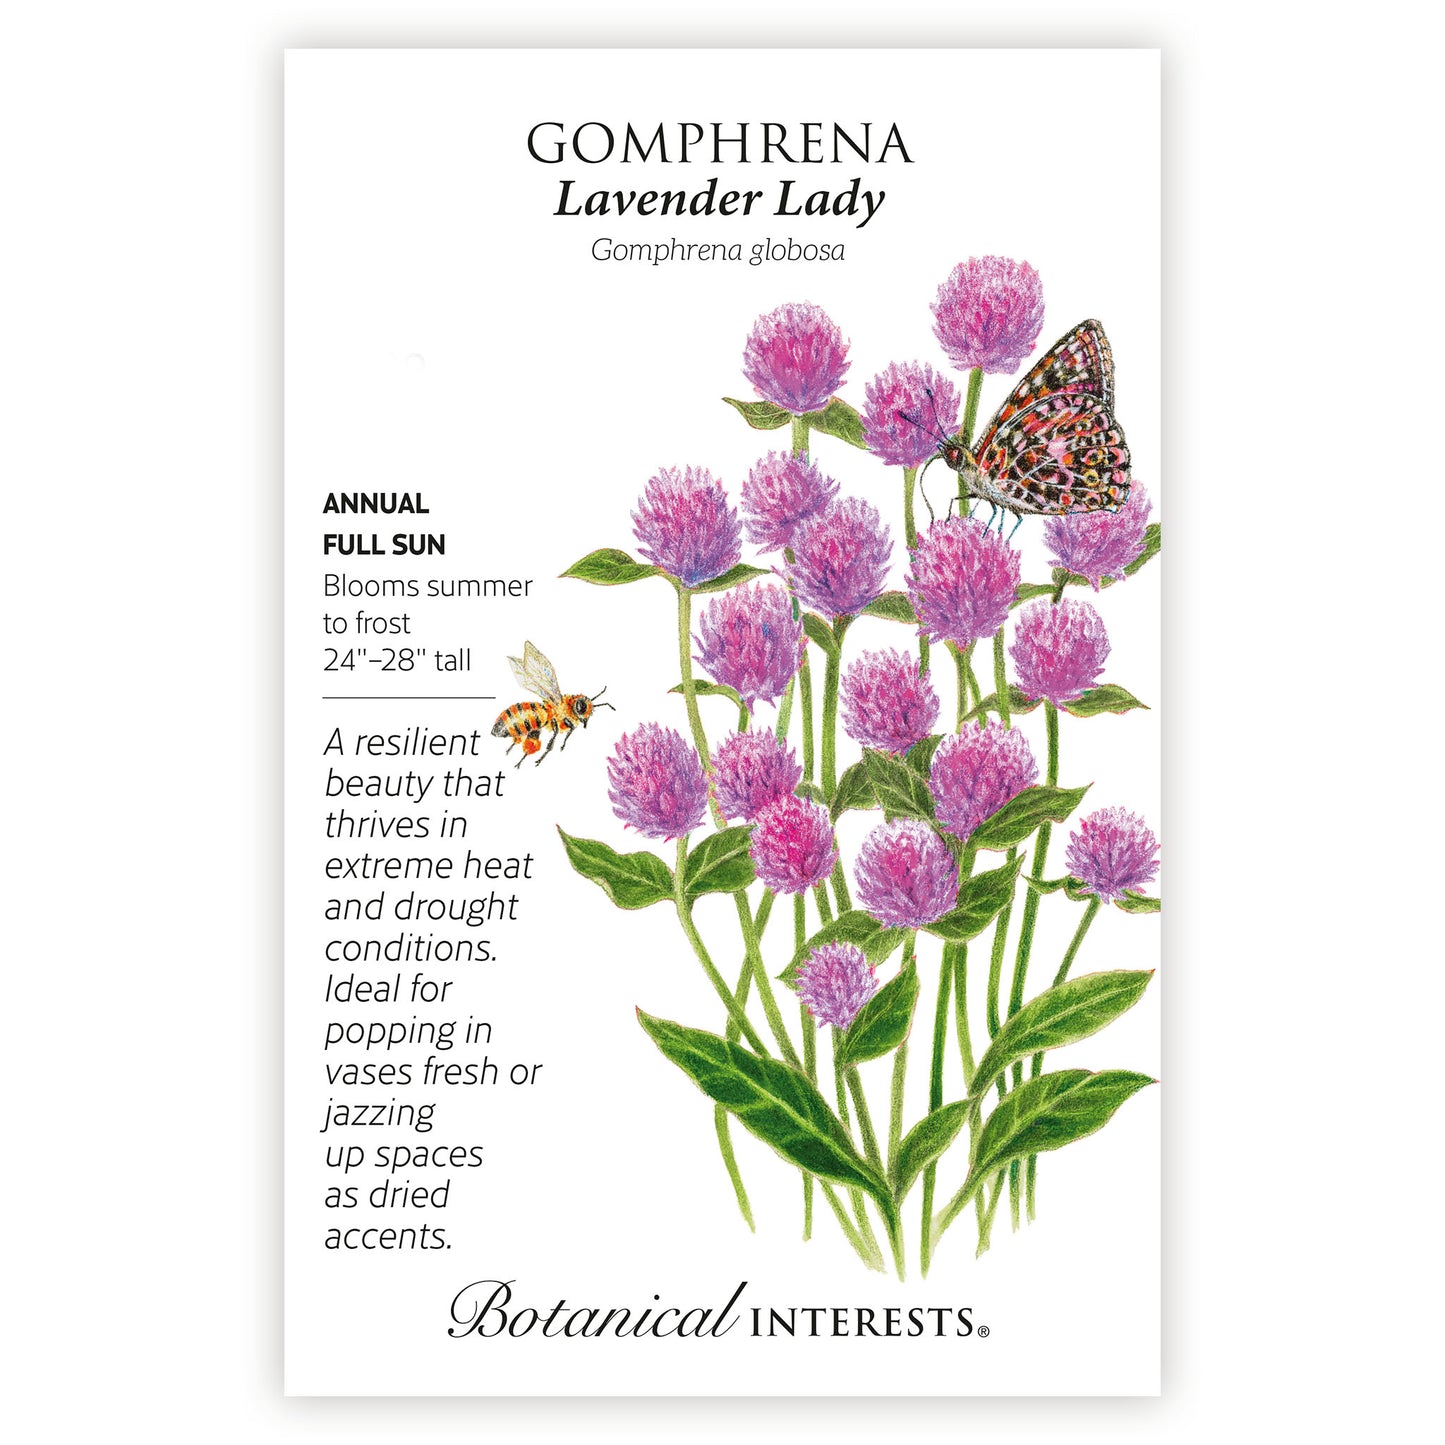 Lavender Lady Gomphrena Seeds